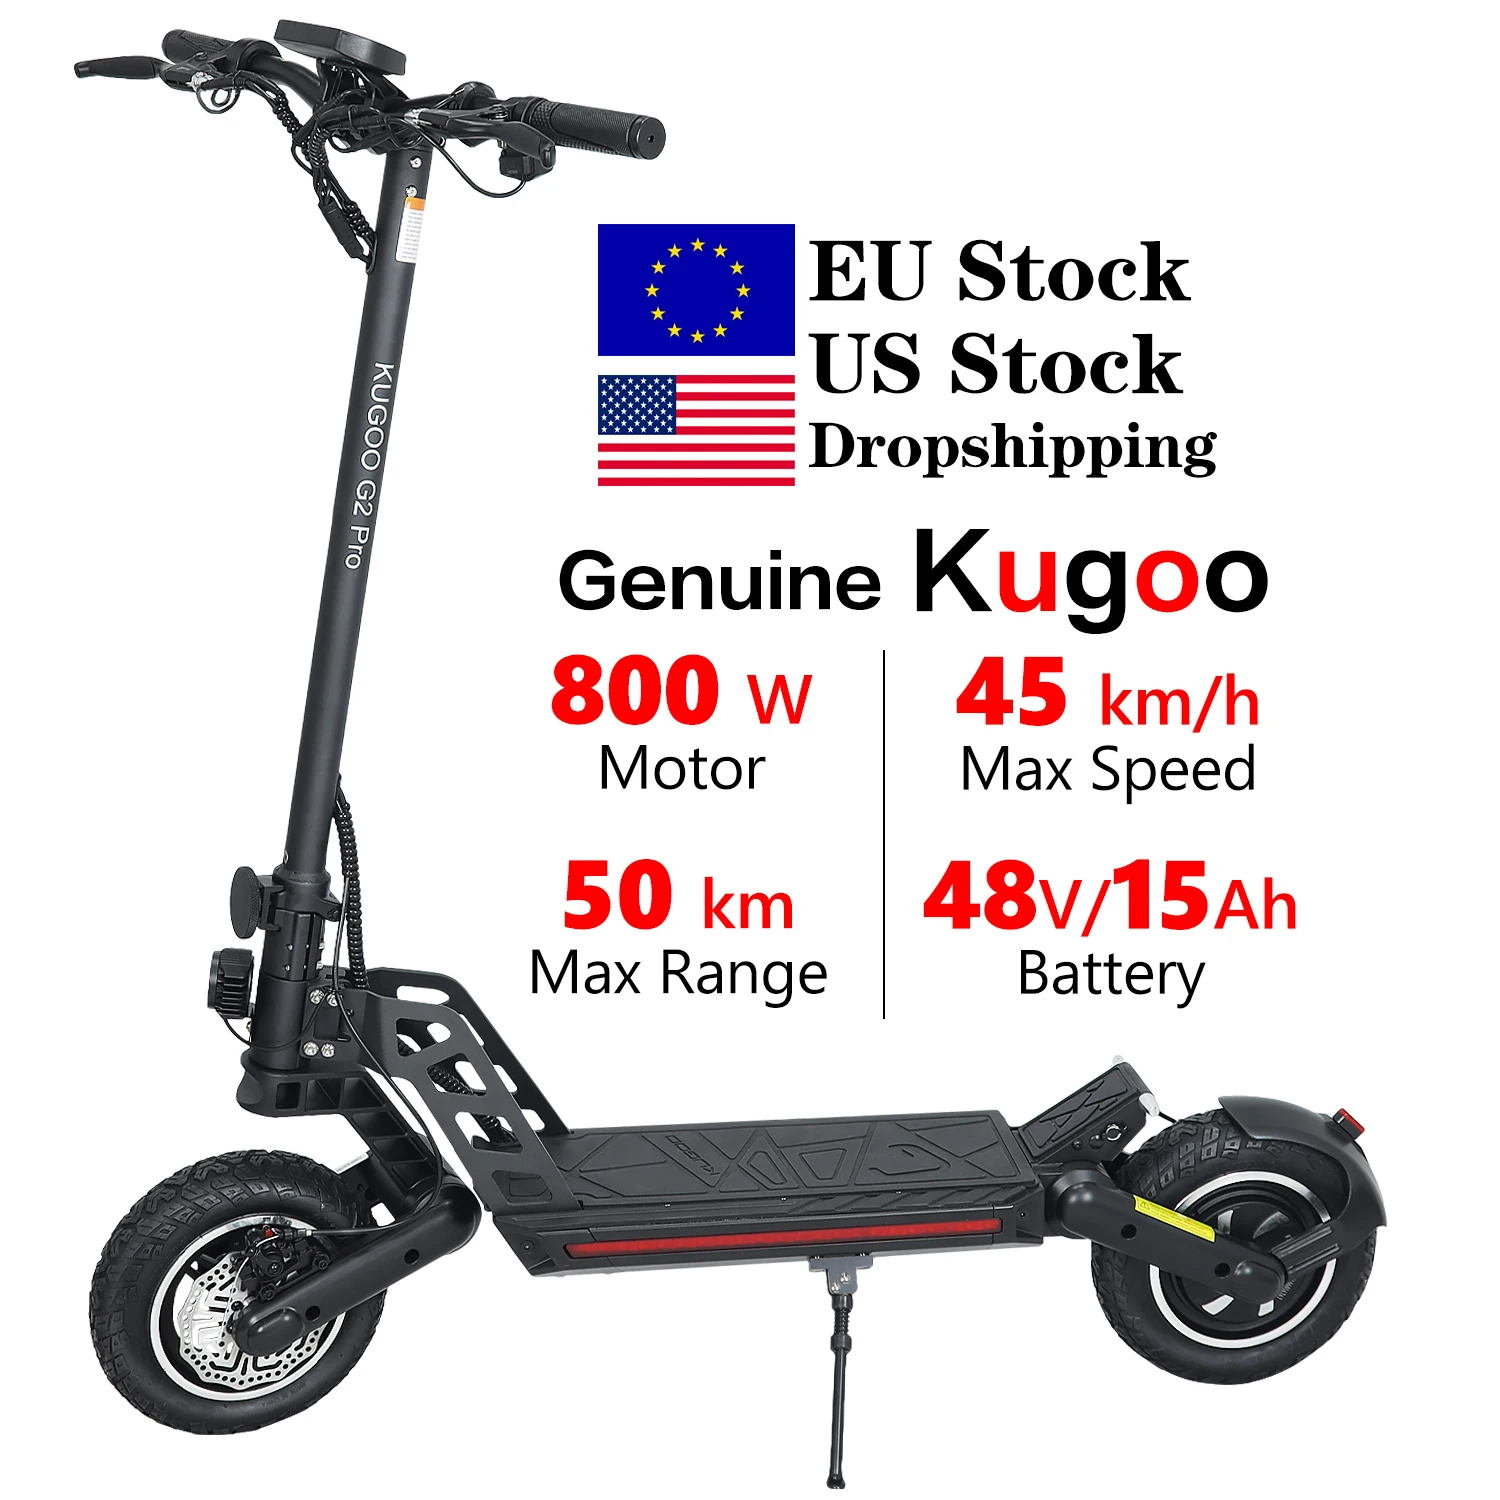 at retfærdiggøre knus ikke noget Wholesale Kugoo G2Pro Original popular 800W 48V 50KM/H speed Trike Big  Wheel Off Road Electric Scooter EU Warehouse From m.alibaba.com